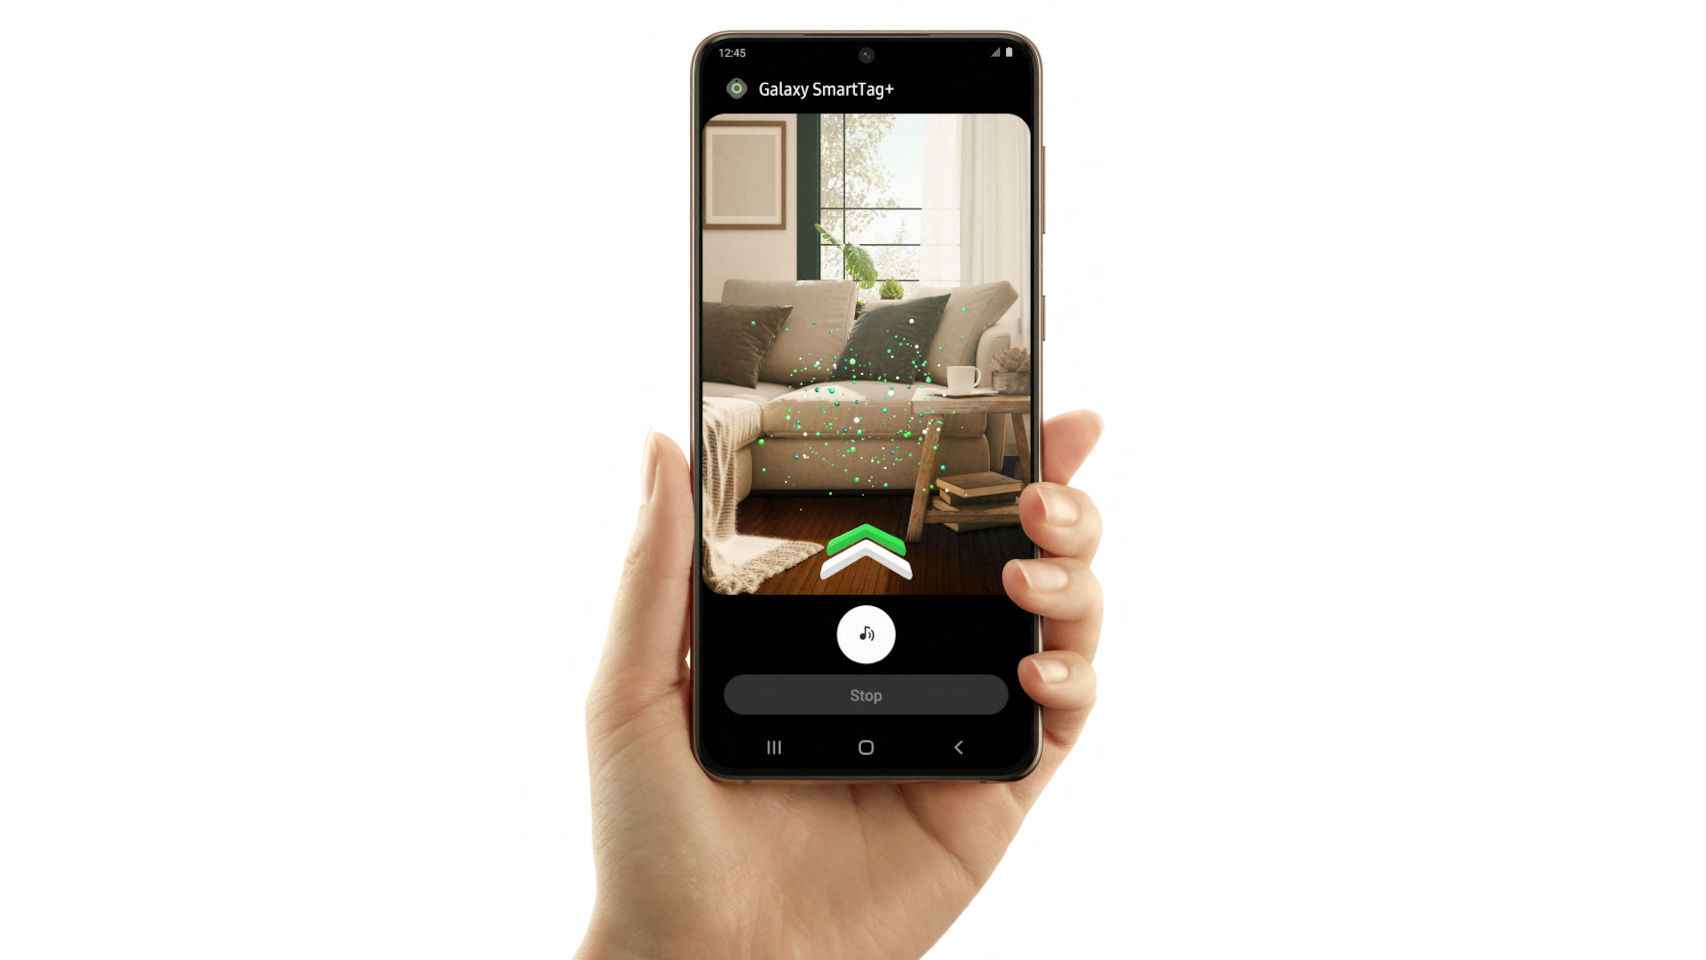 La app de Samsung usa realidad aumentada para encontrar objetos